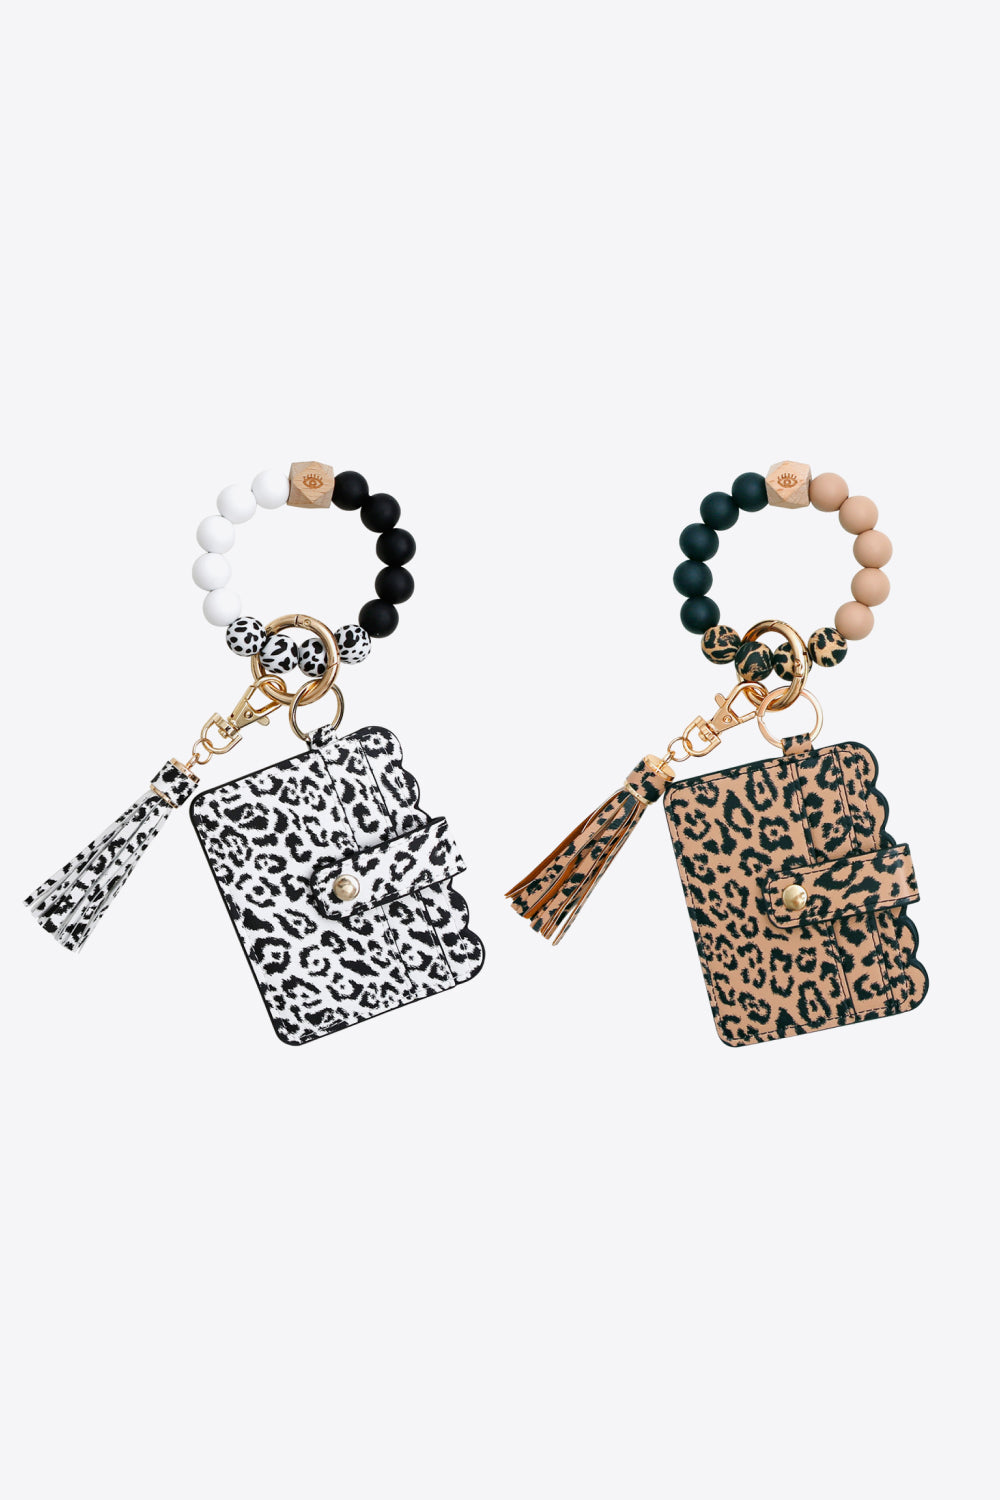 Trendsi Cupid Beauty Supplies Camel/White / One Size Keychains Random 2-Pack Leopard Mini Purse Tassel Wristlet Key Chain